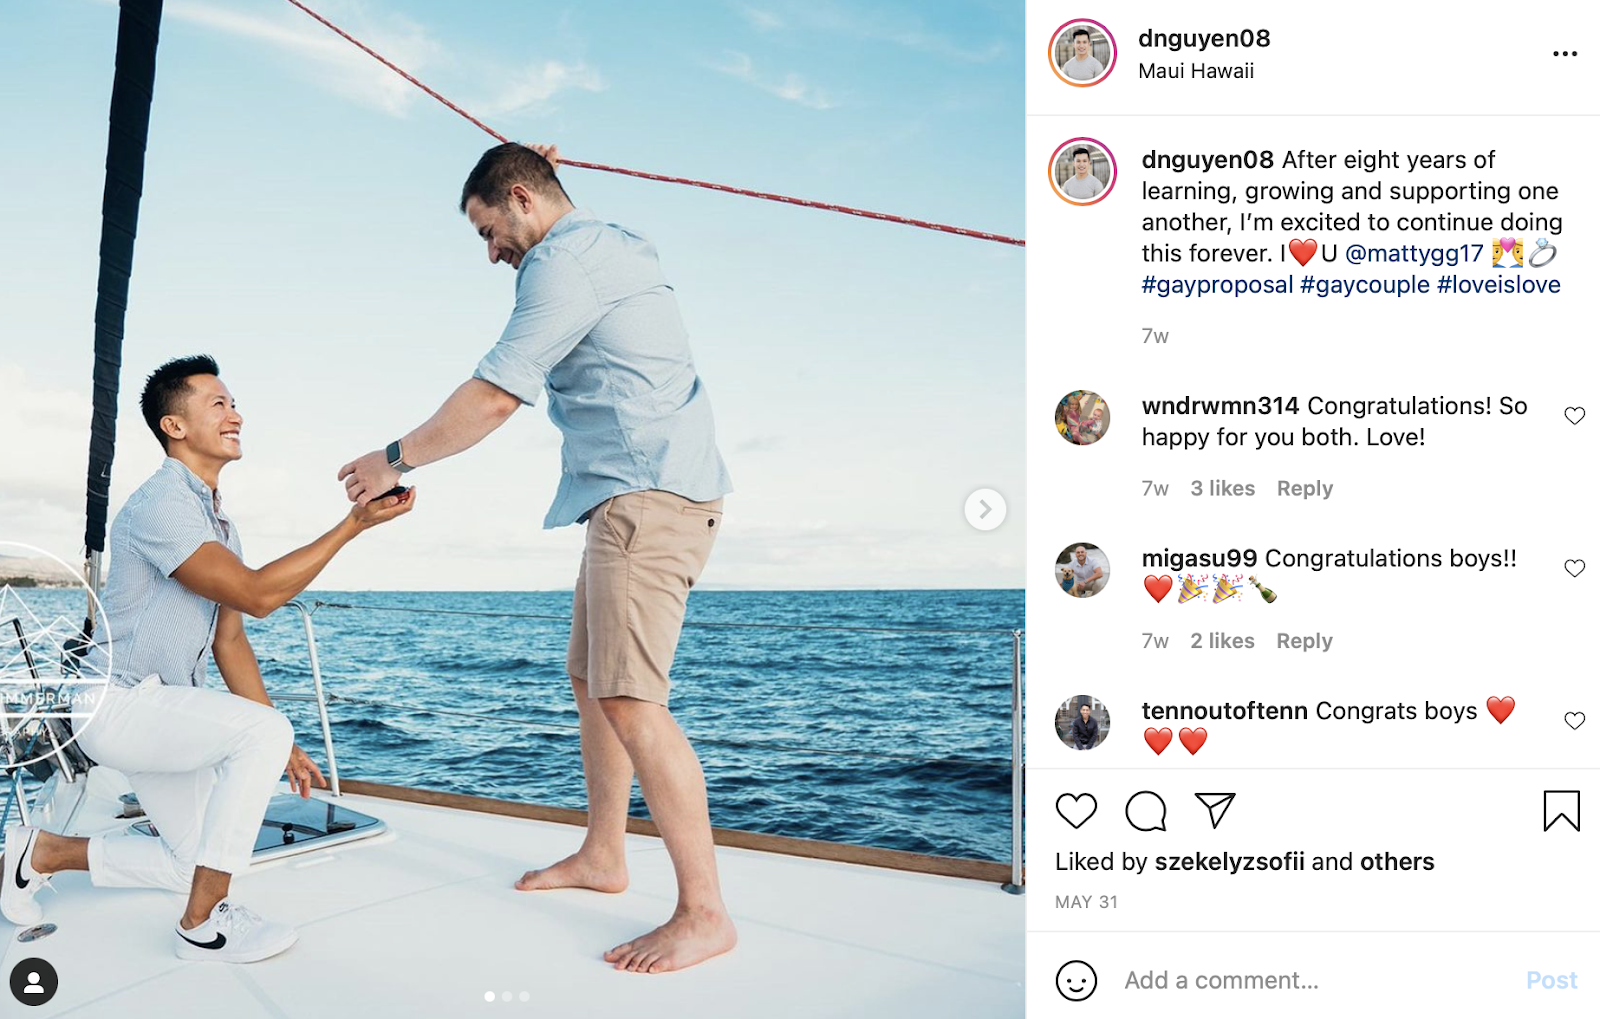 wedding proposal on a boat instagram photo